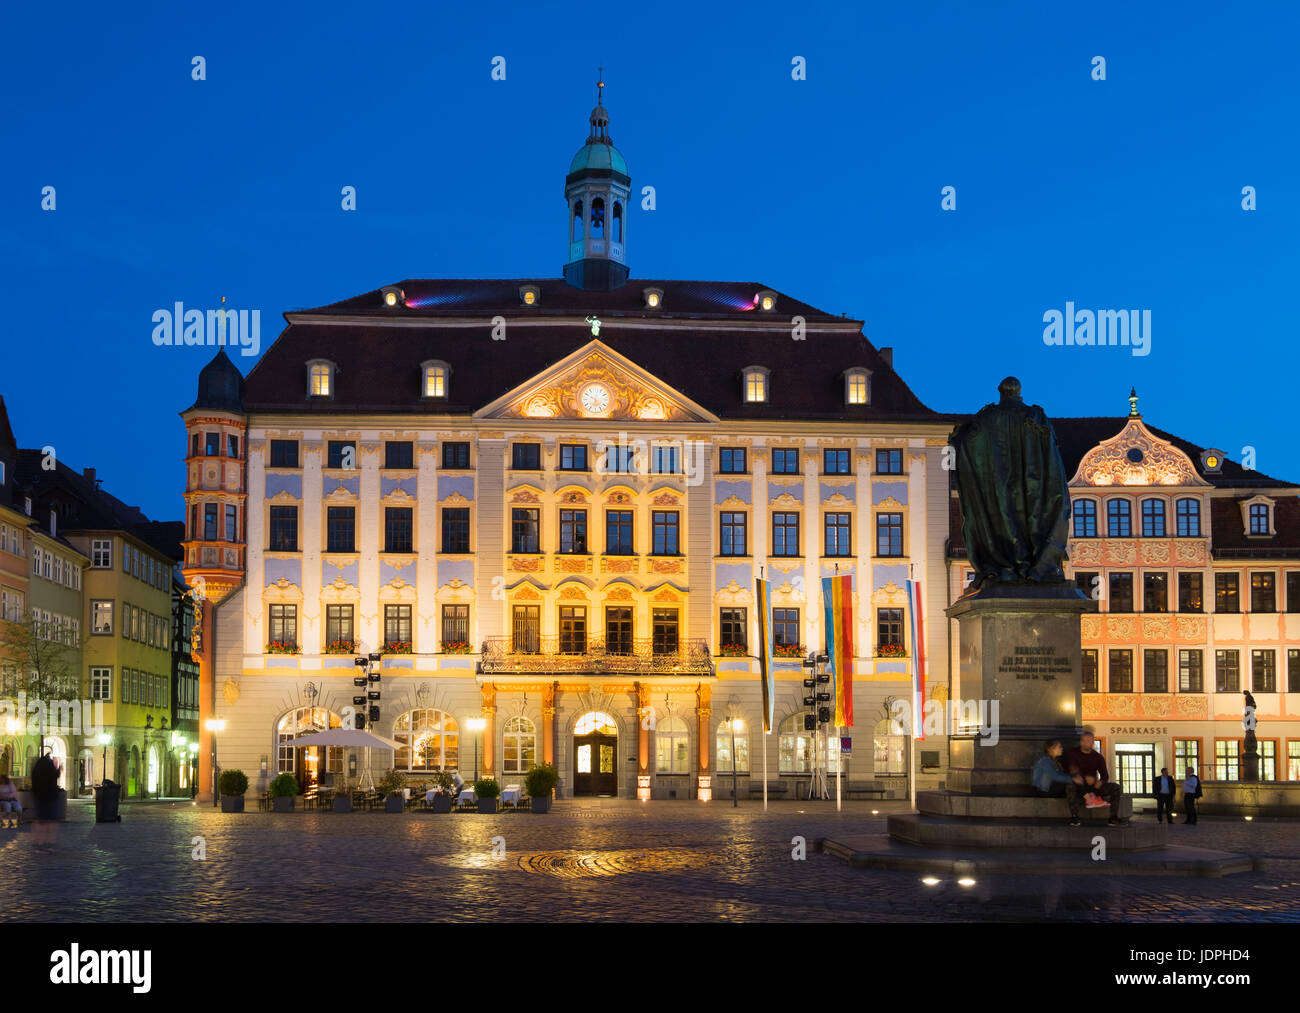 City Hall and Prince Albert Memorial, Market Square, Coburg, Upper Franconia, Franconia, Bavaria, Germany Stock Photo